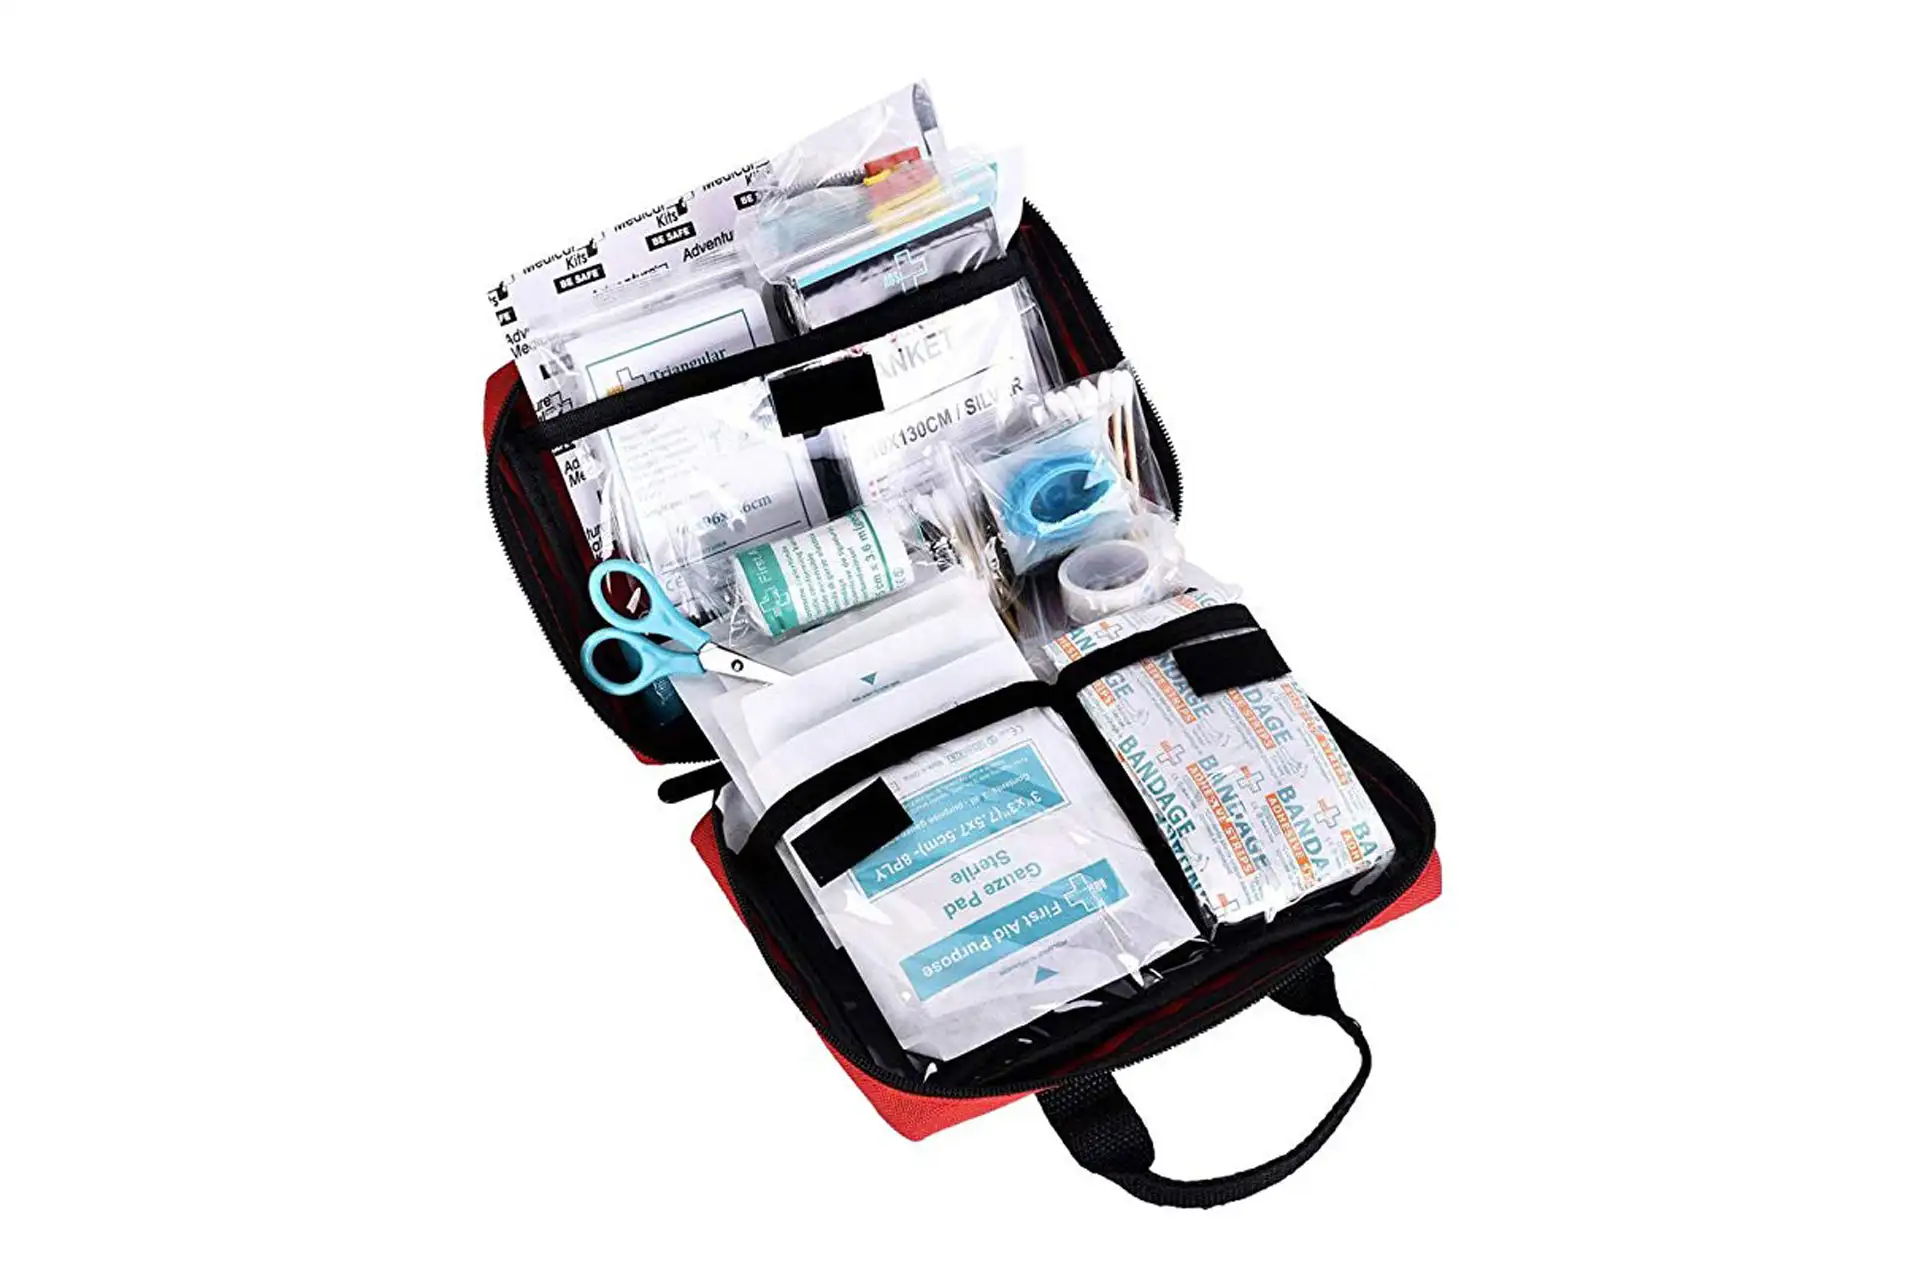 First Aid Kit; Courtesy of Amazon